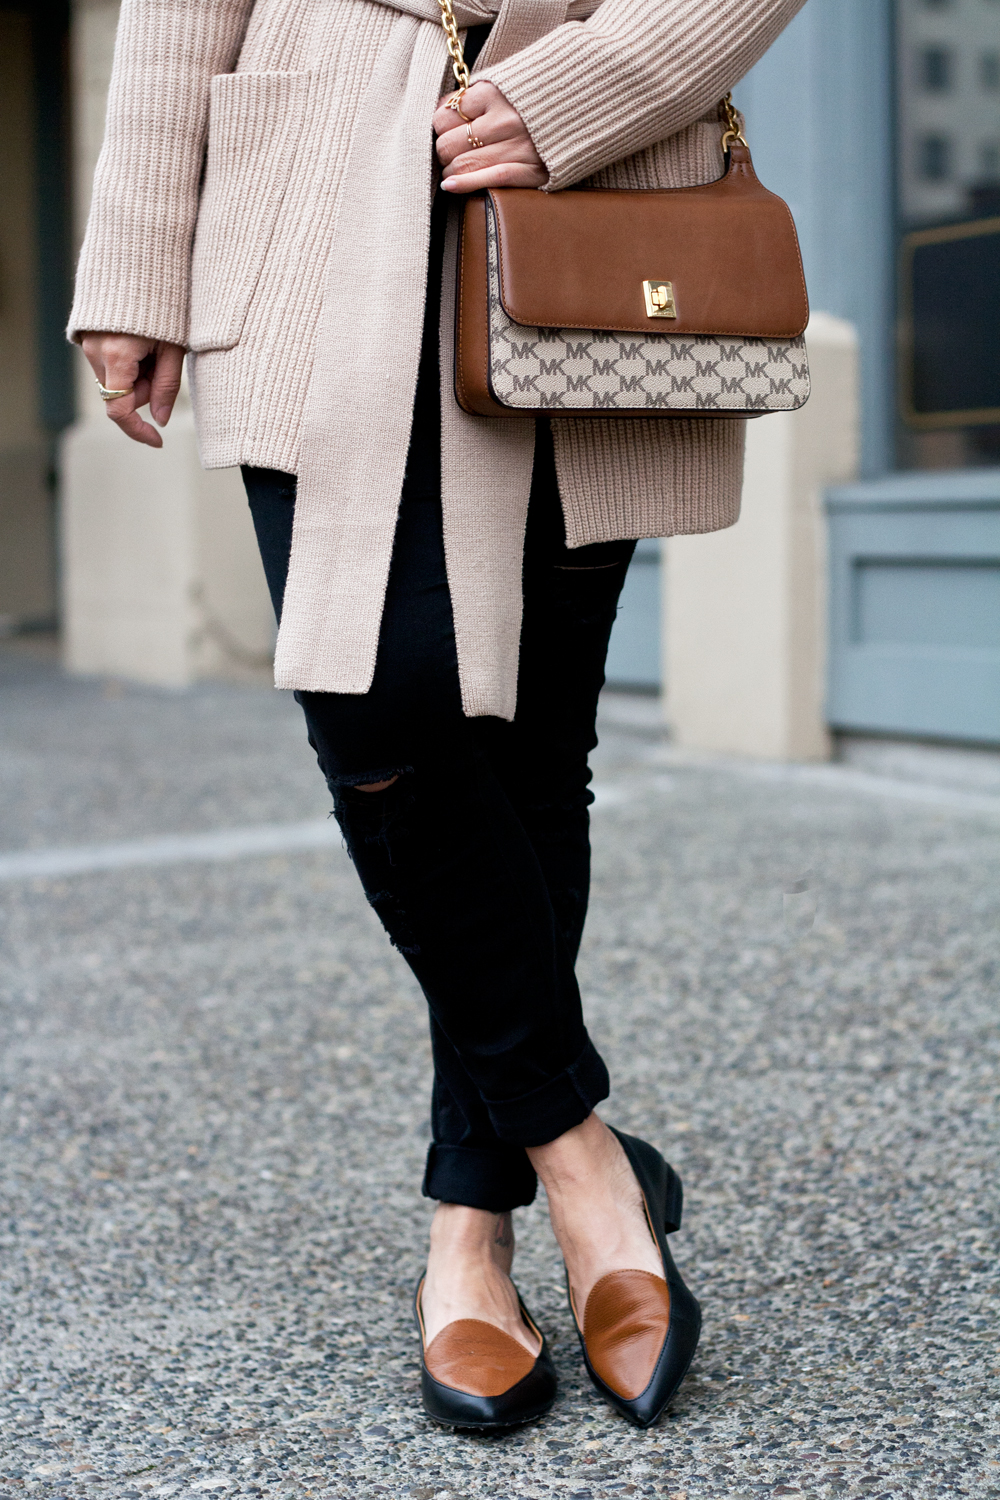 08michaelkors-bag-amourvert-knit-sweater-everlane-loafers-travel-style-fashion